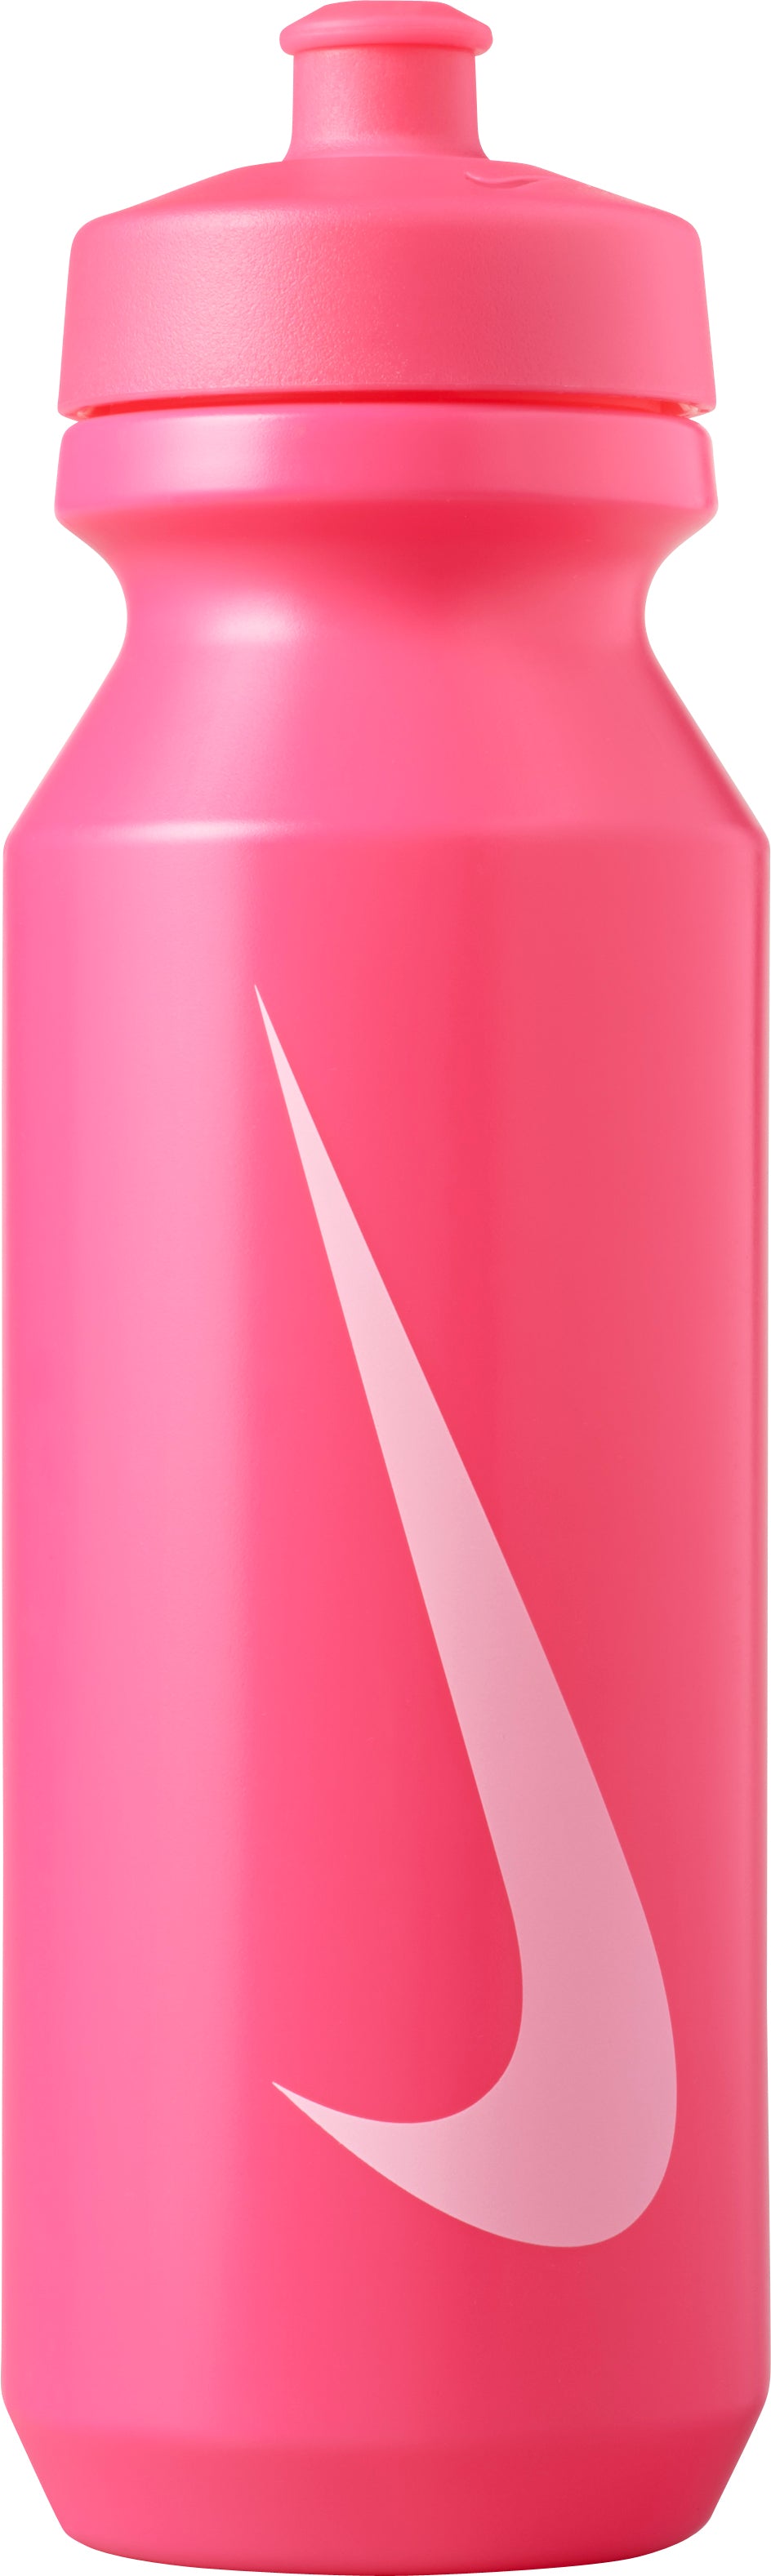 Nike Big Mouth Bottle 2.0 (32OZ) --_'Pink/White'_